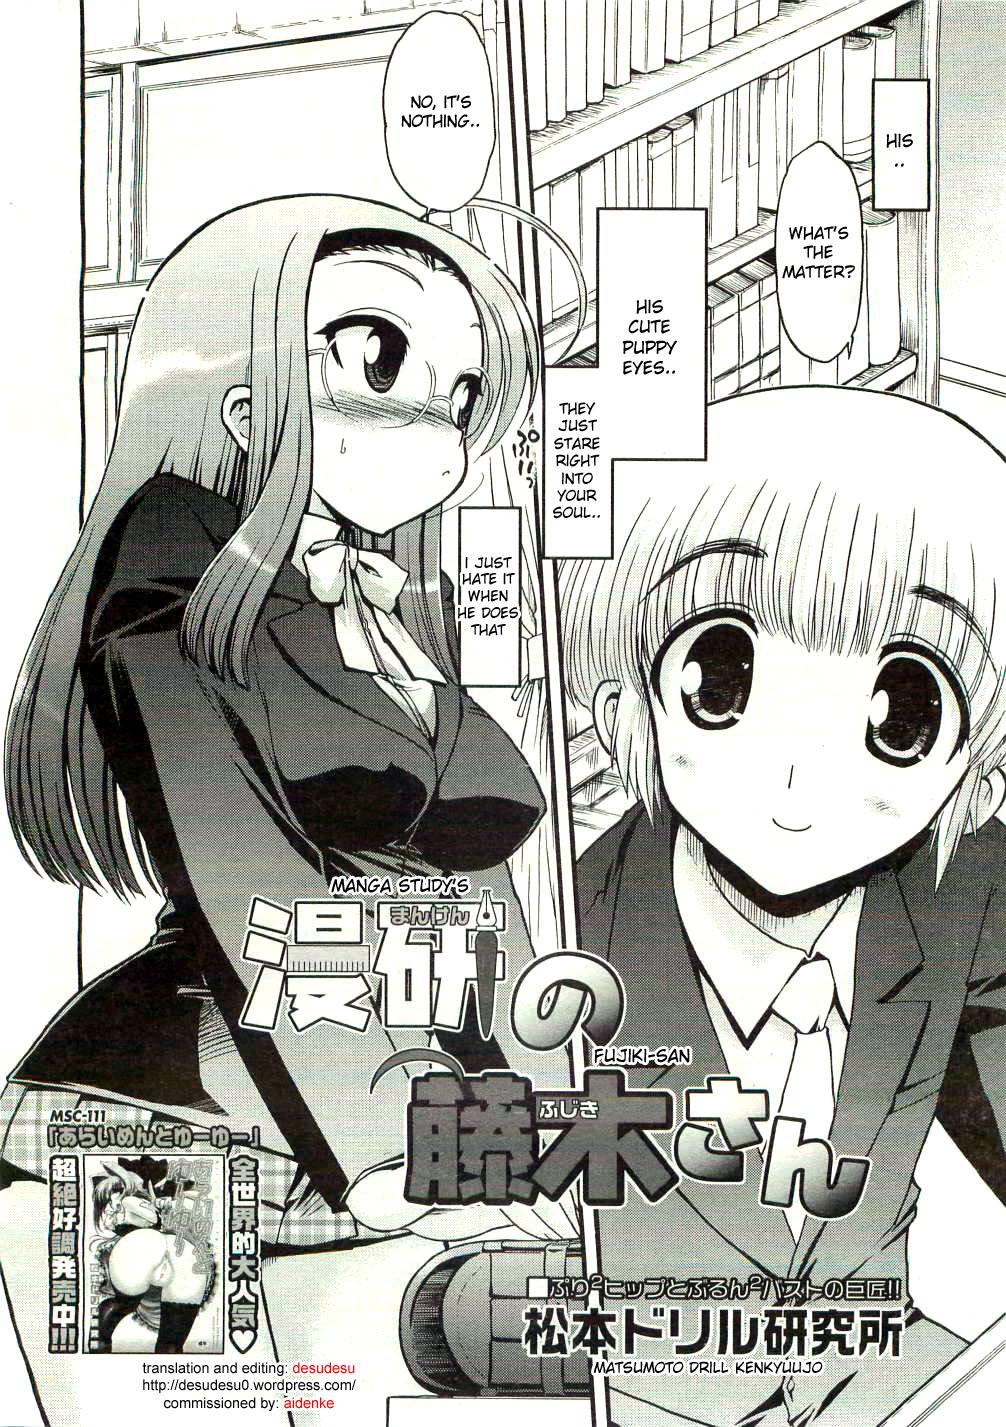 manga study’s Fujiki-San 1